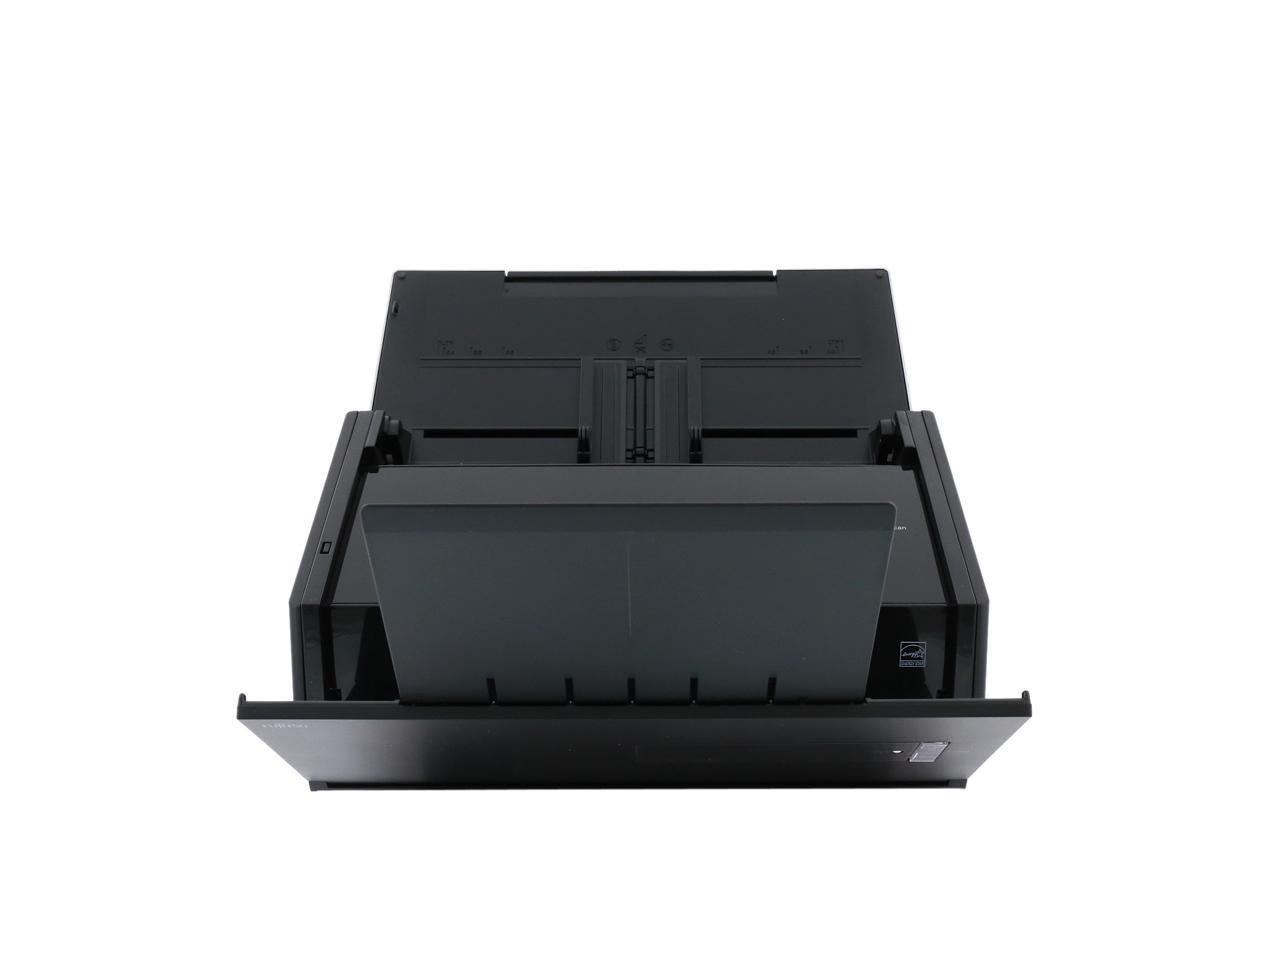 fujitsu scansnap ix500 color duplex desk scanner.